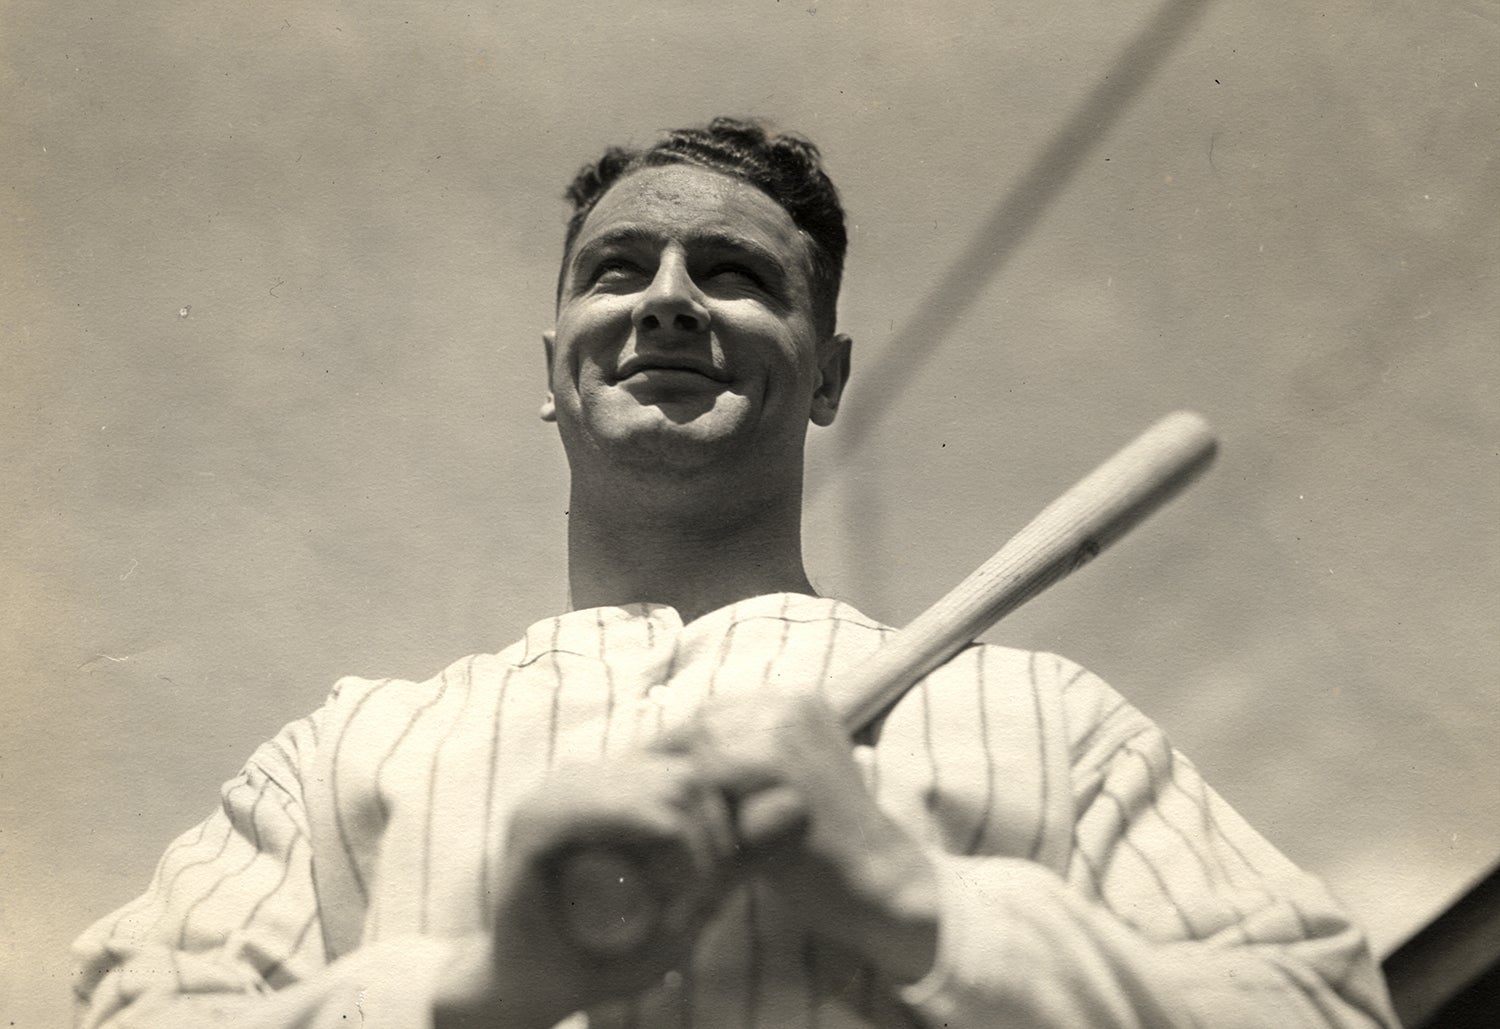 Lou Gehrig Day at Yankee Stadium